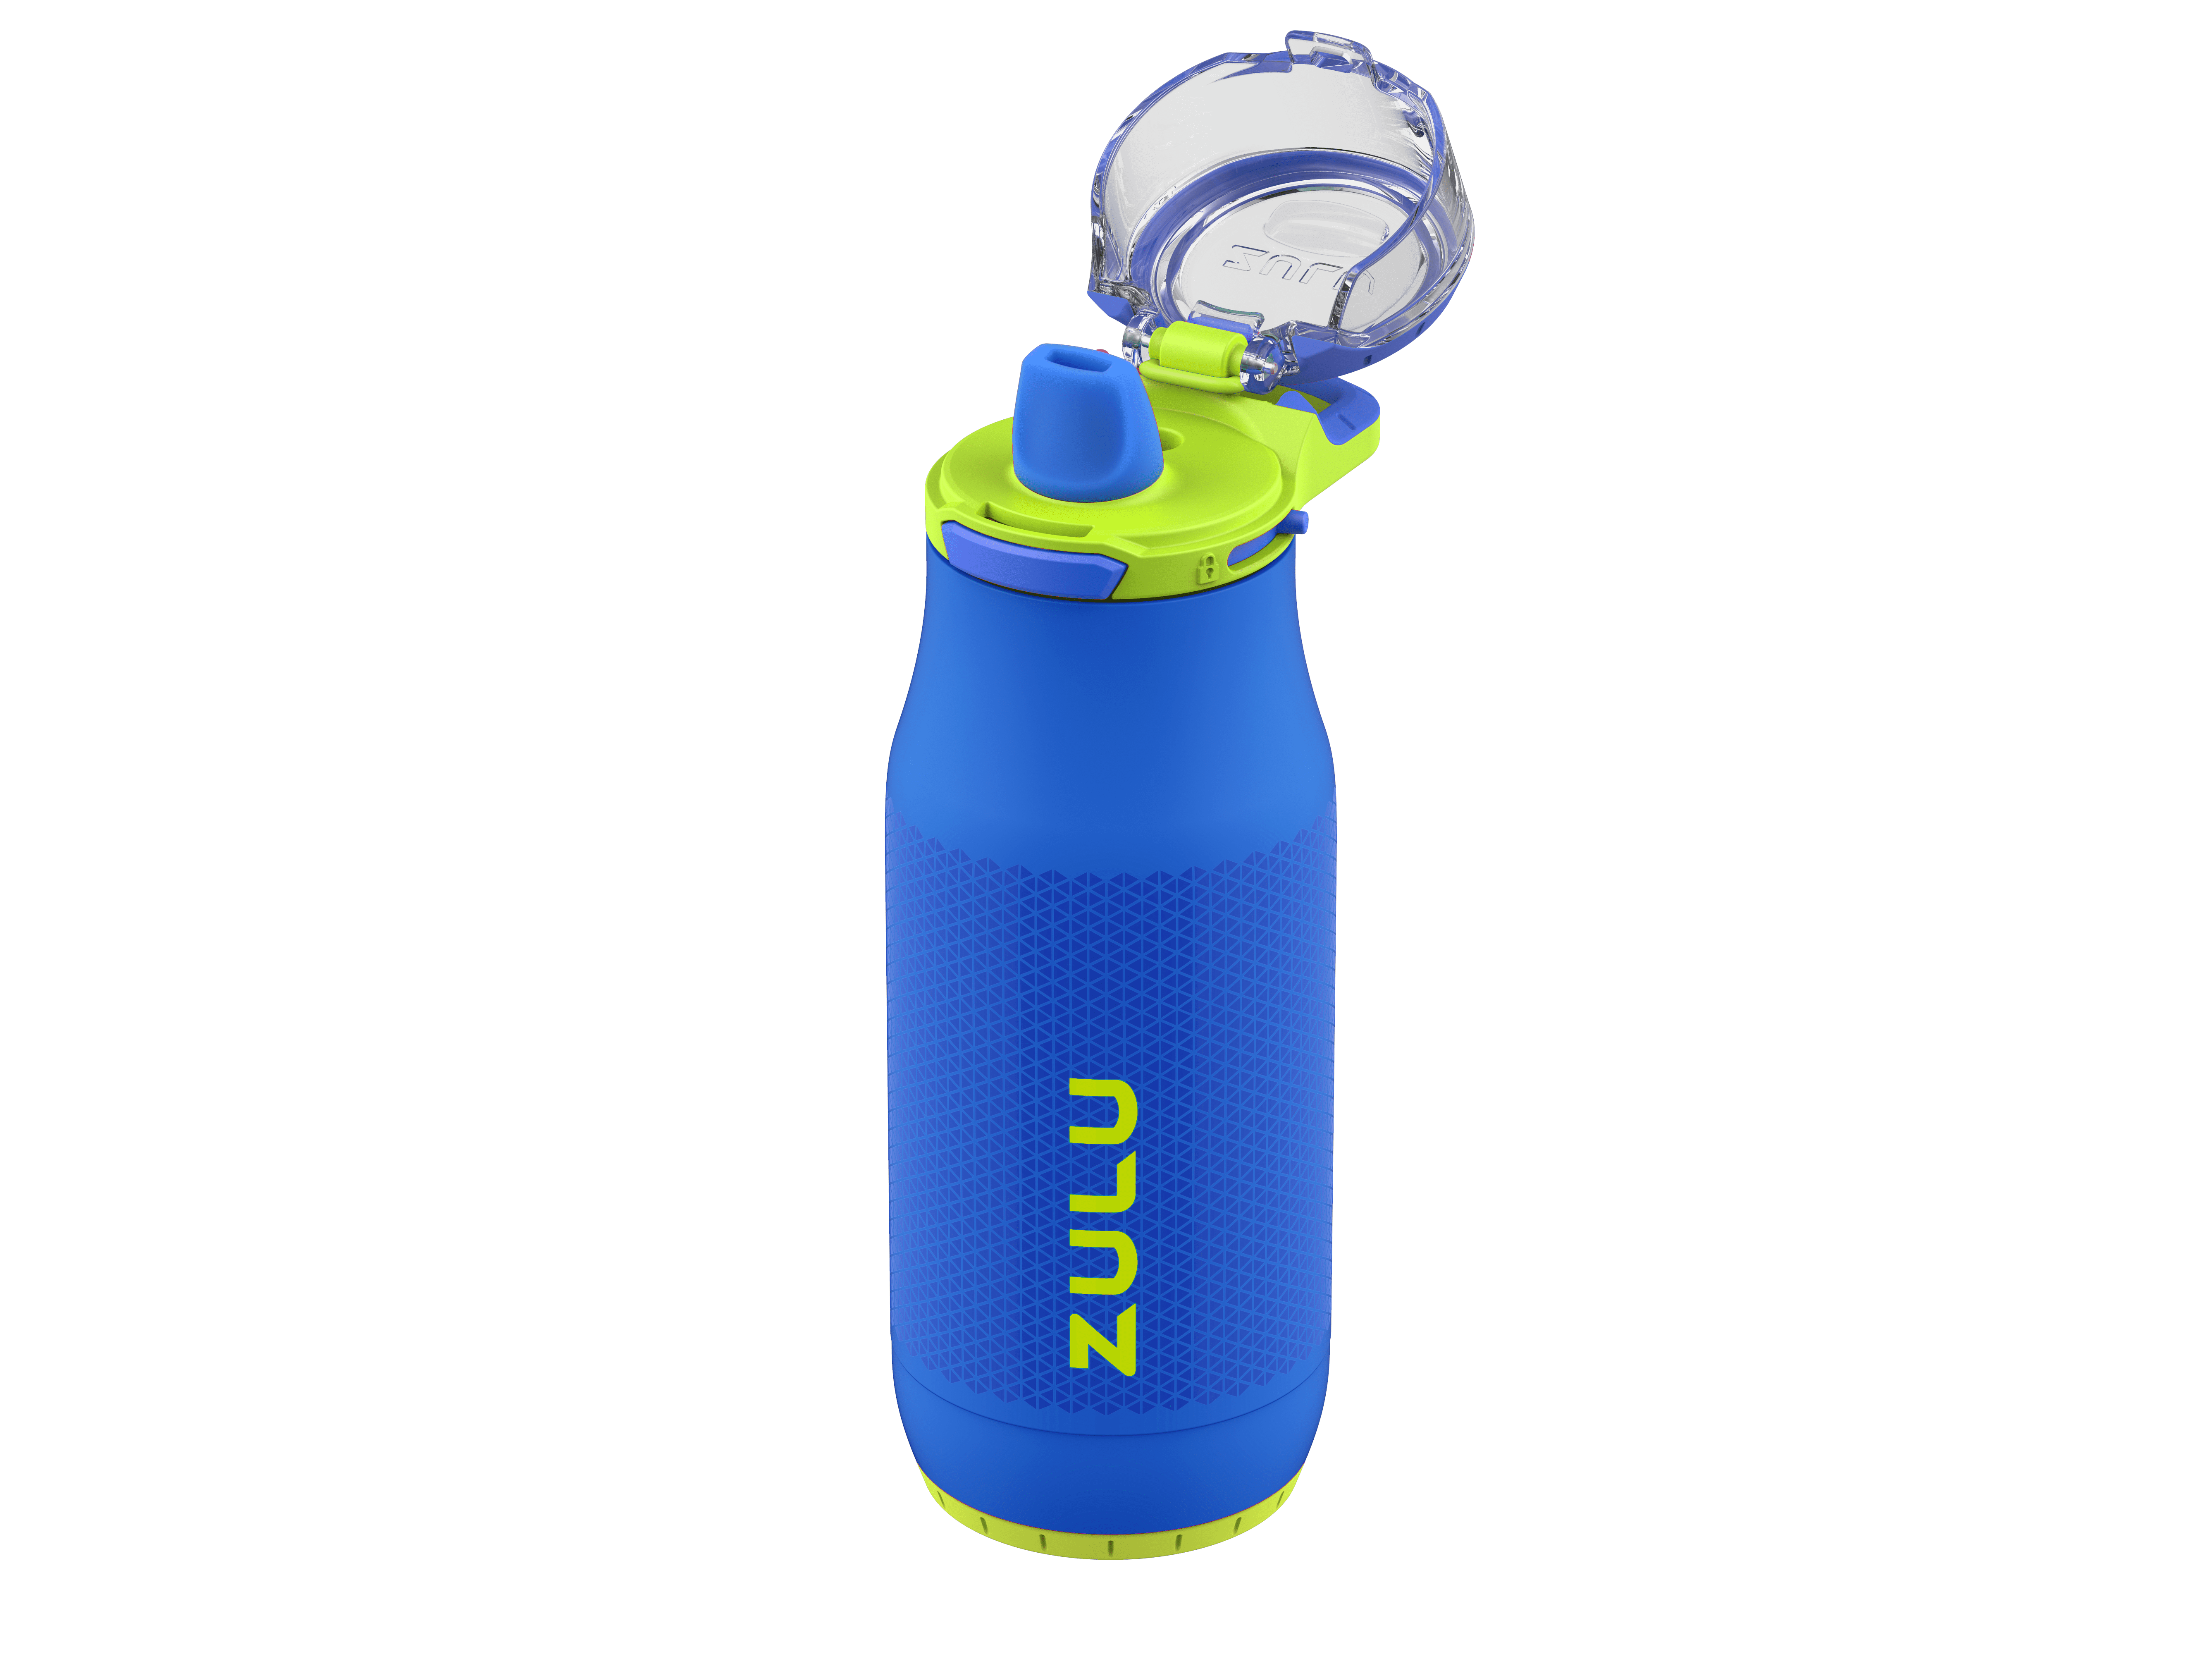 Ello Riley Junior Stainless Steel Water Bottle - Blue, 12 oz - Kroger